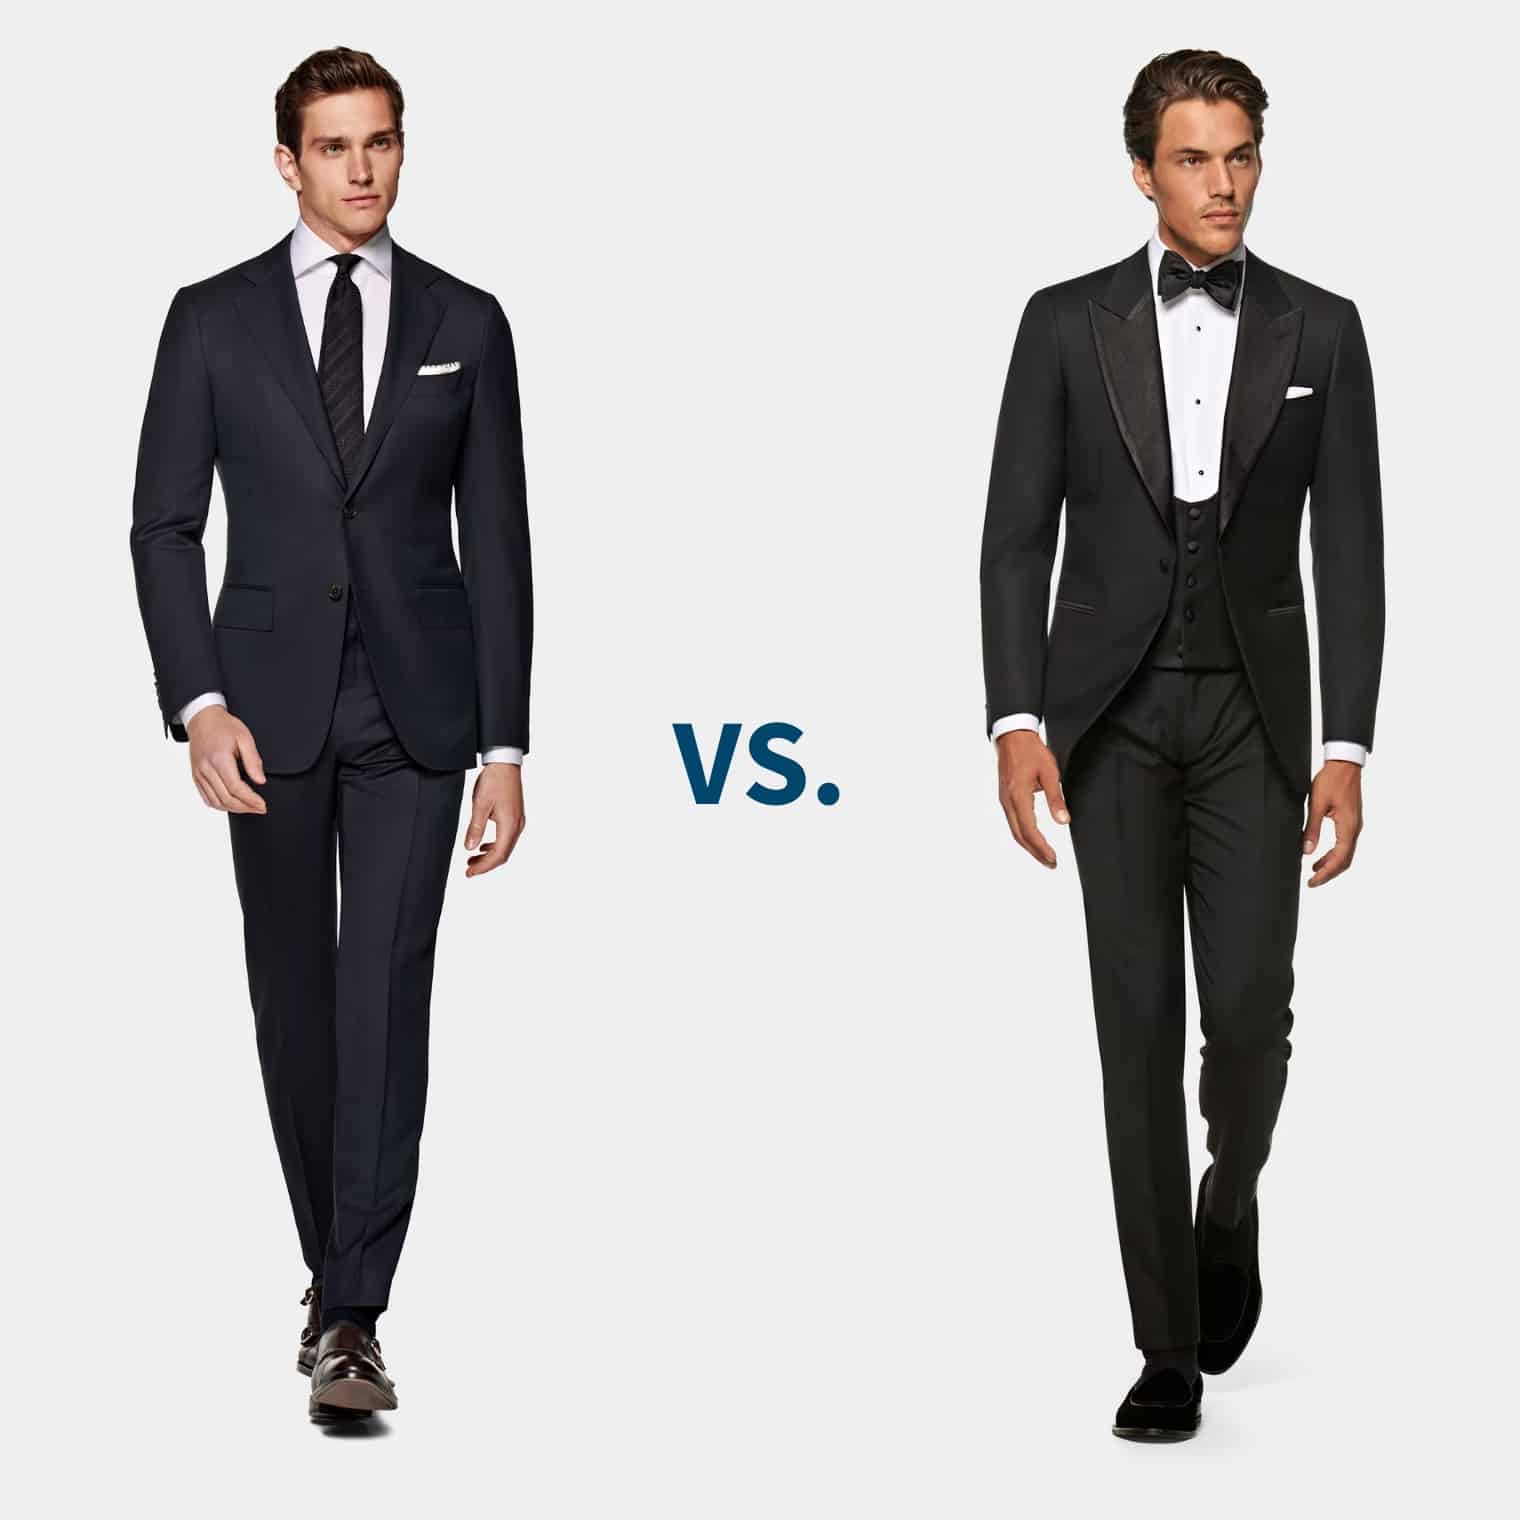 https://www.themodestman.com/wp-content/uploads/2022/12/Suit-vs-tuxedo.jpg